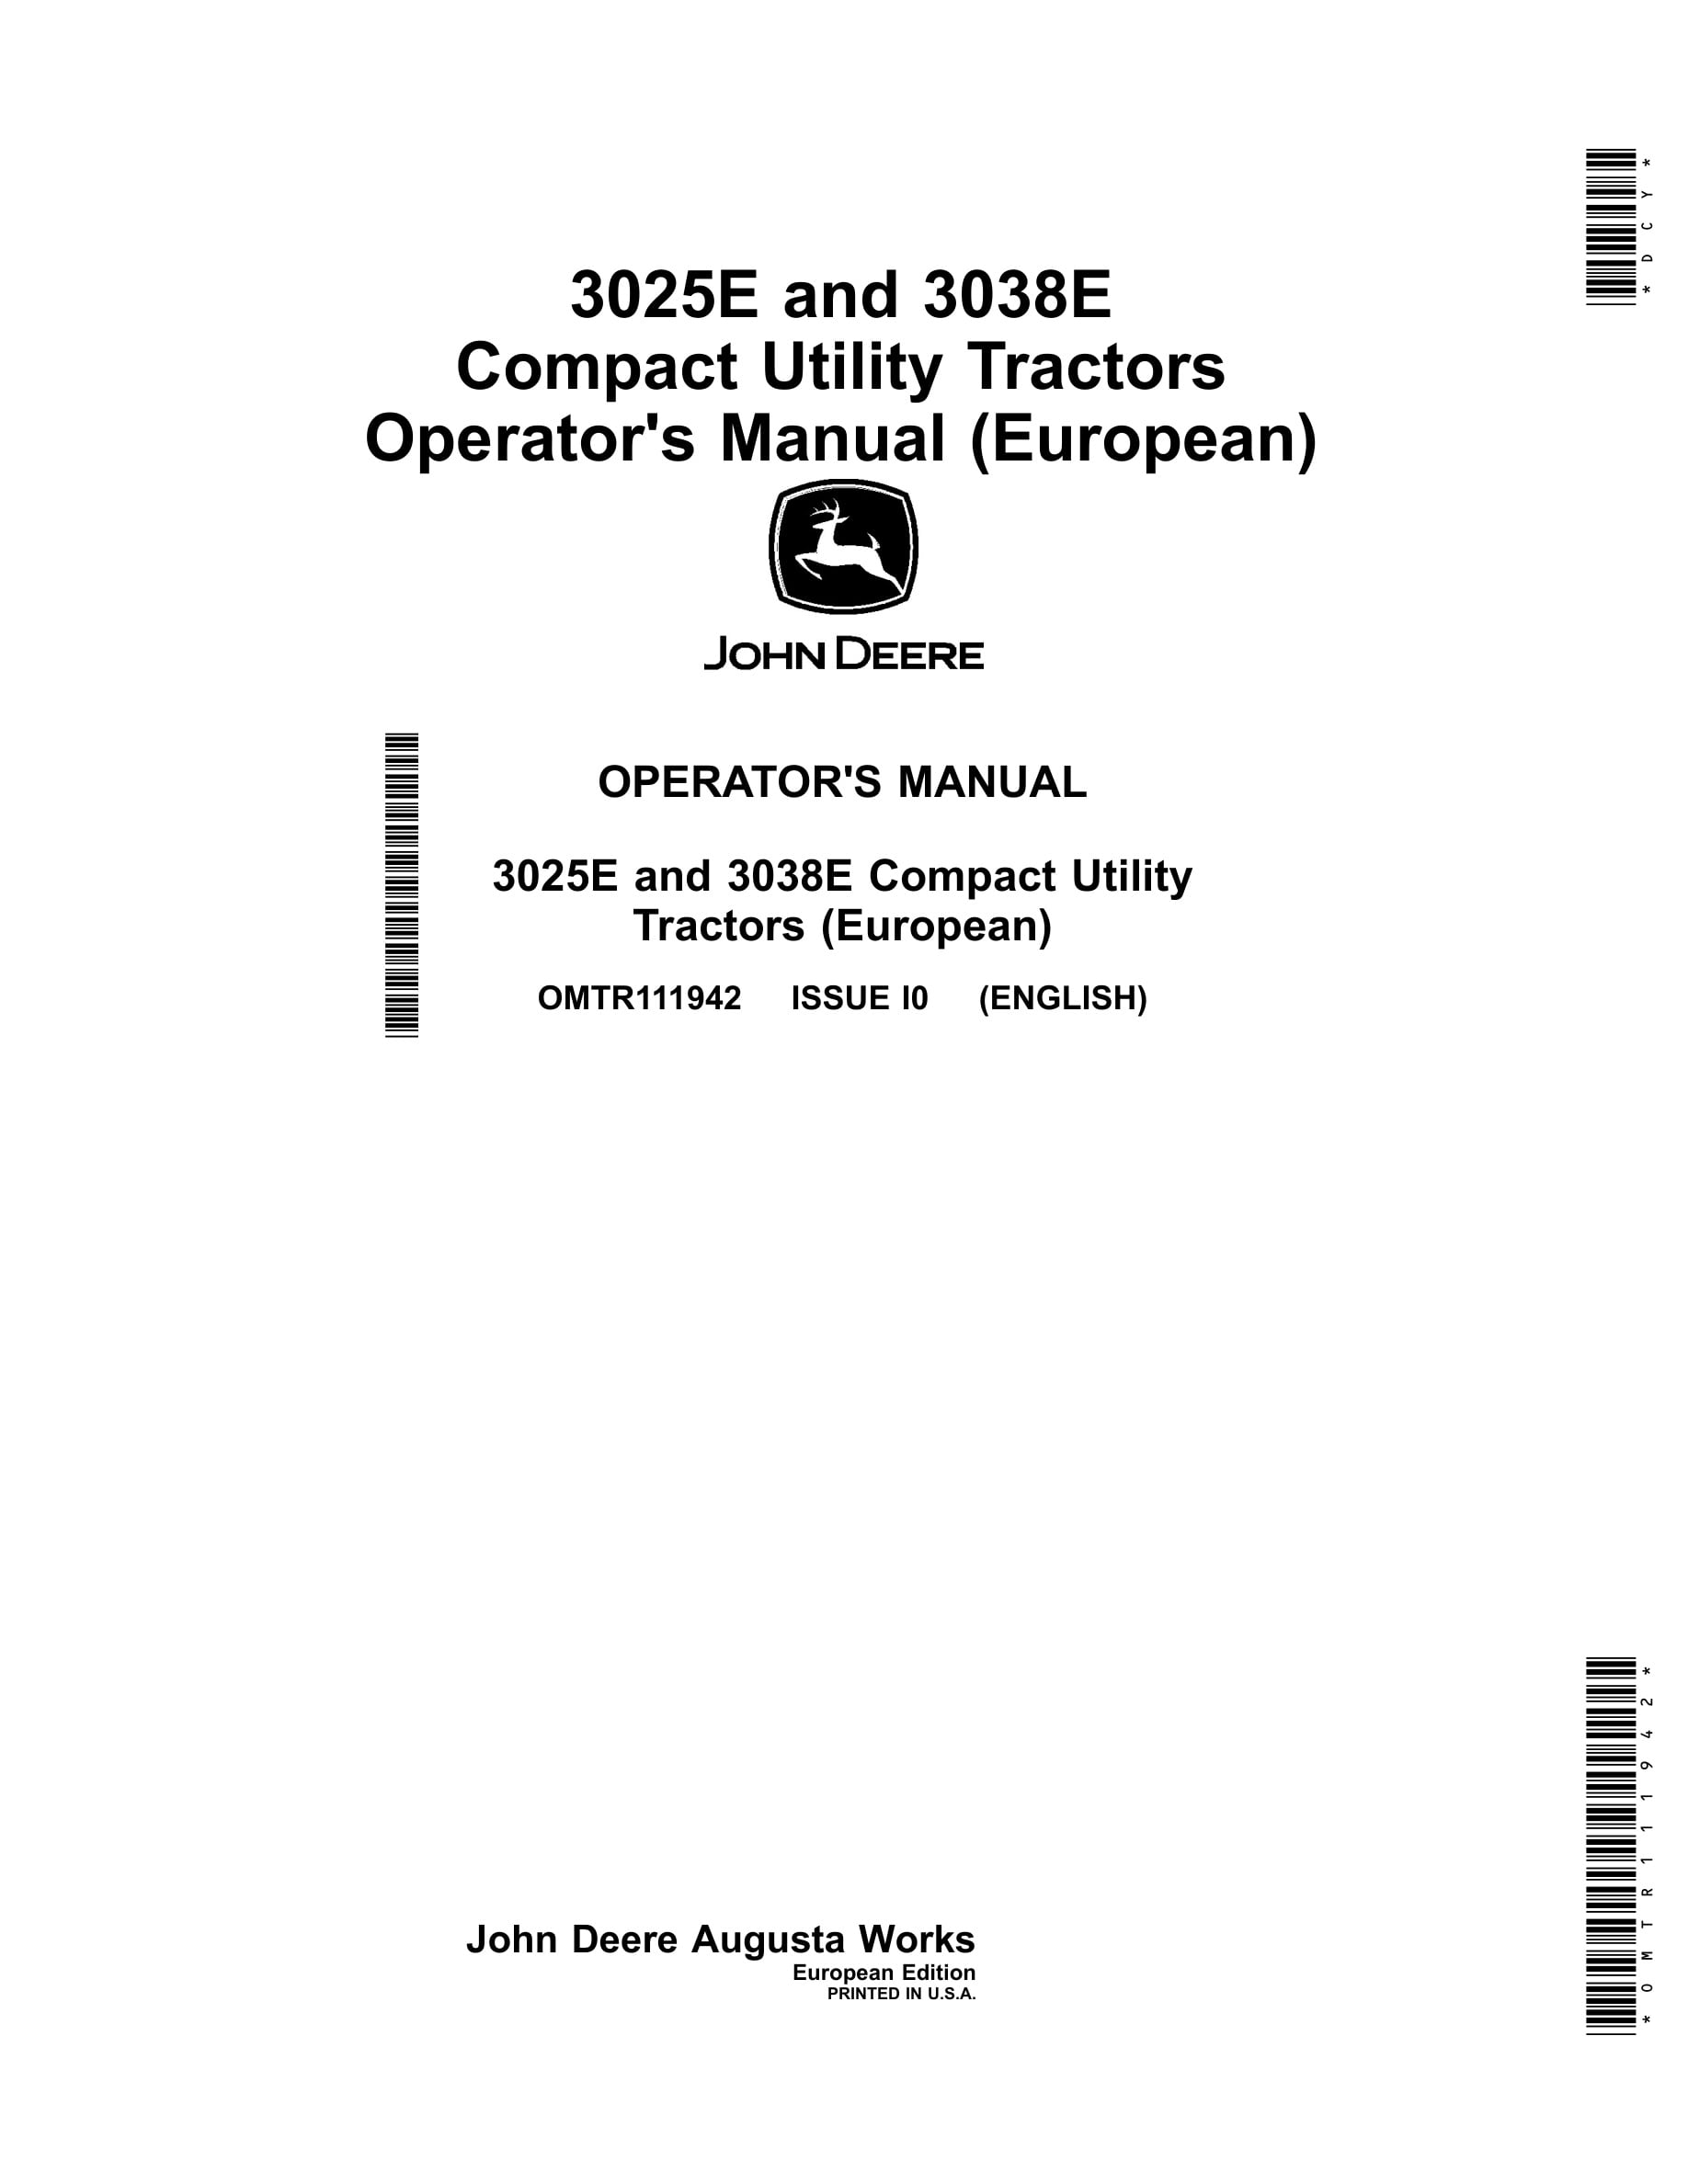 John Deere 3025e And 3038e Compact Utility Tractors Operator Manuals OMTR111942-1